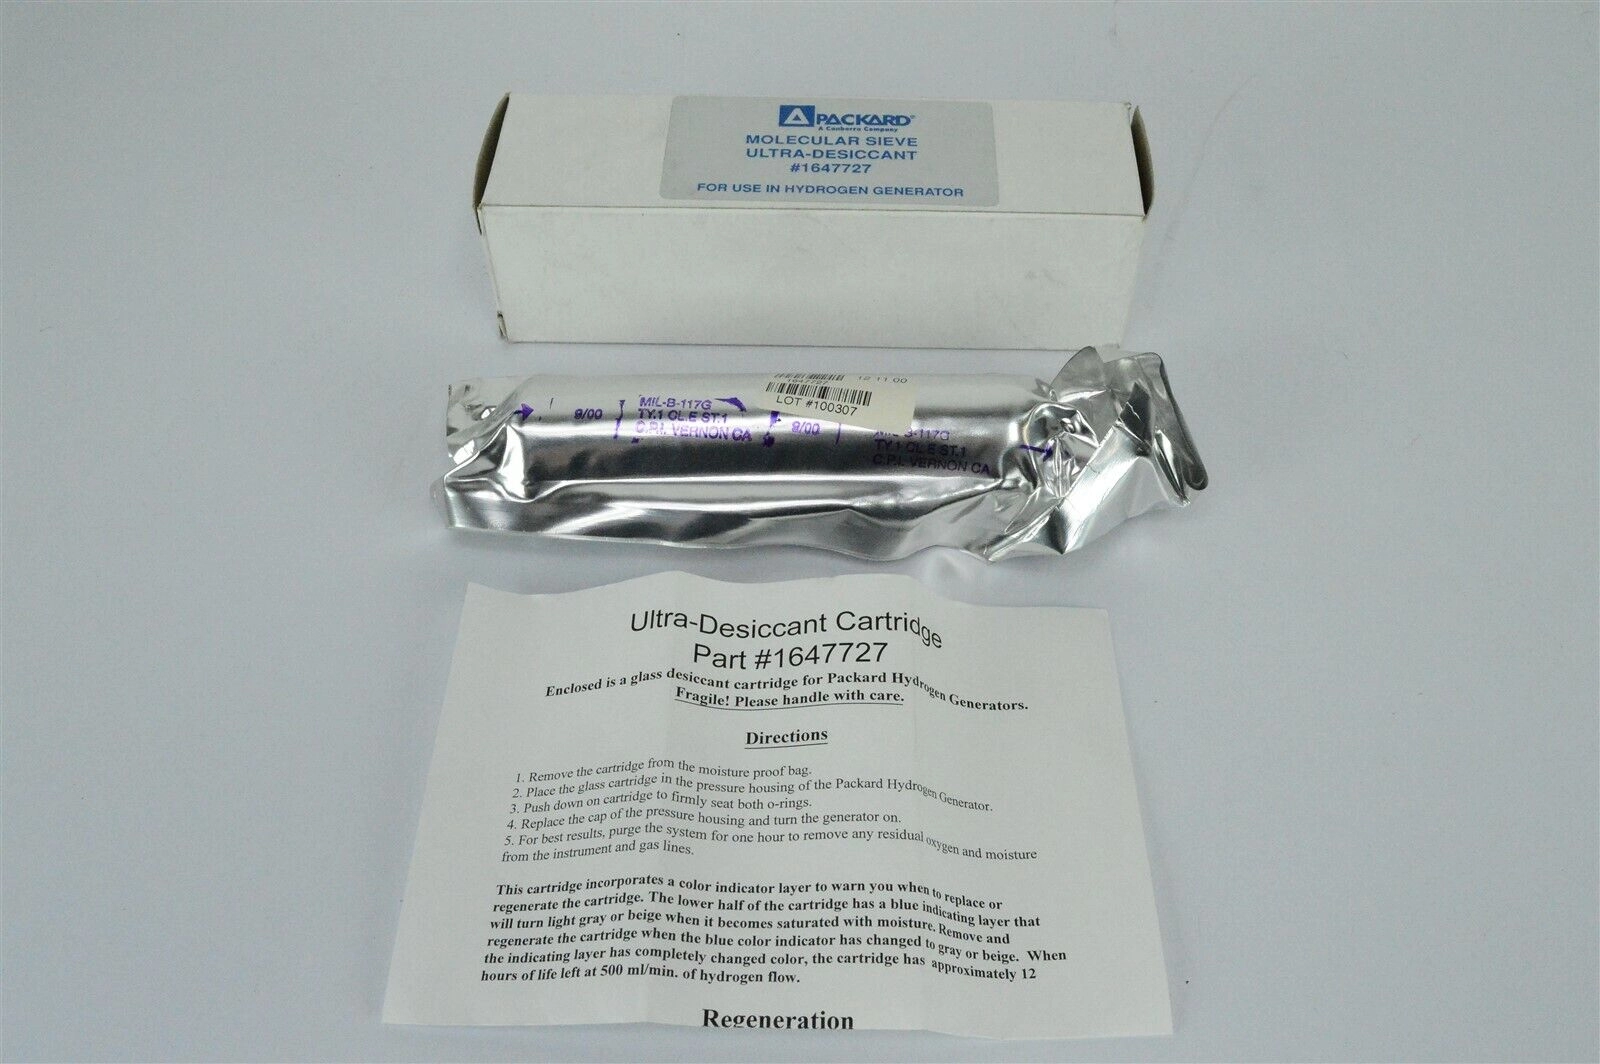 Packard Molecular Sieve Ultra-Desiccant Cartridge 